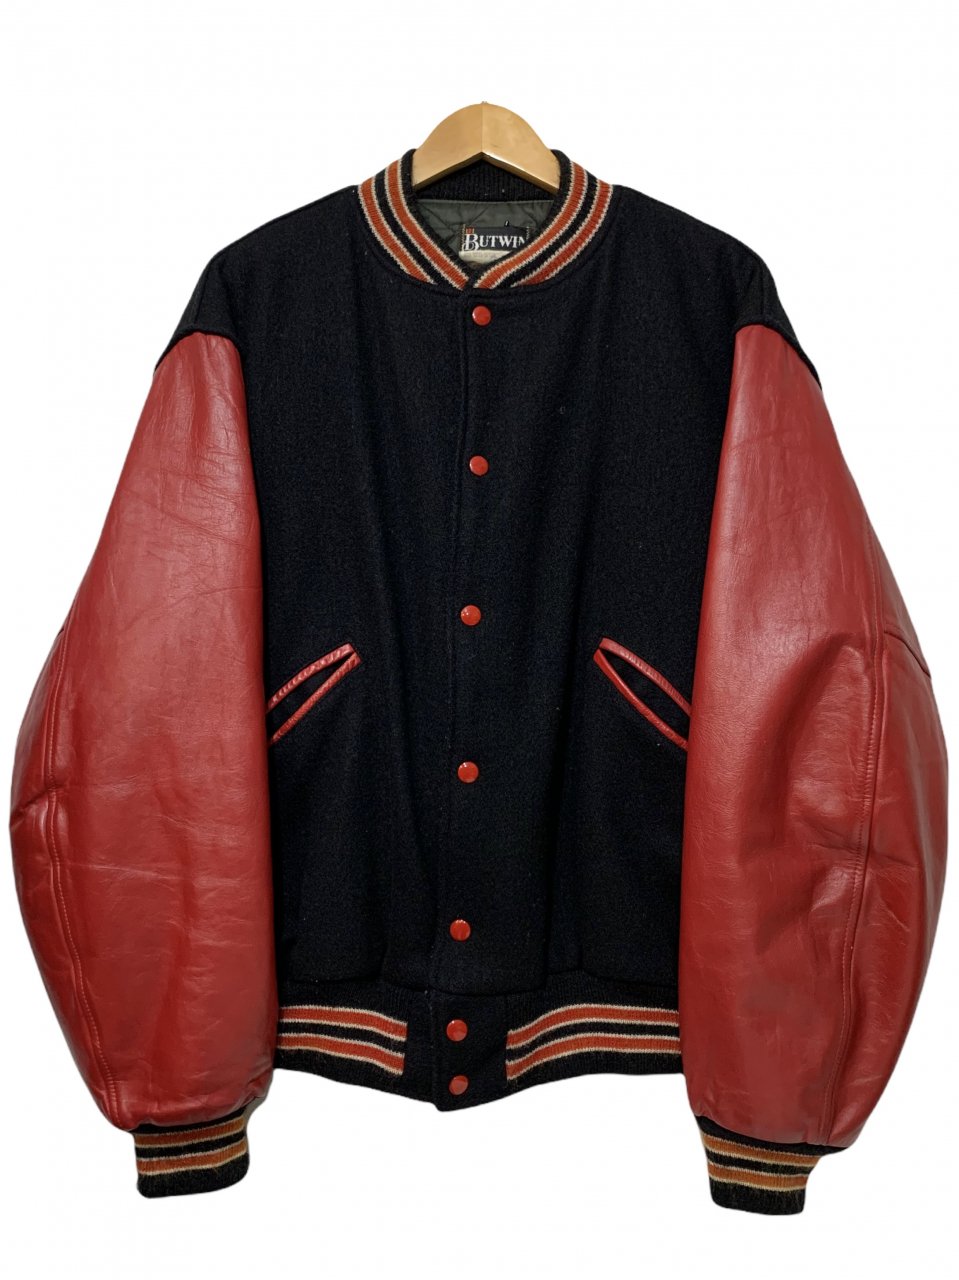 USA製 80s BUTWIN Wool Leather Varsity Jacket 黒赤 46 バトウィン